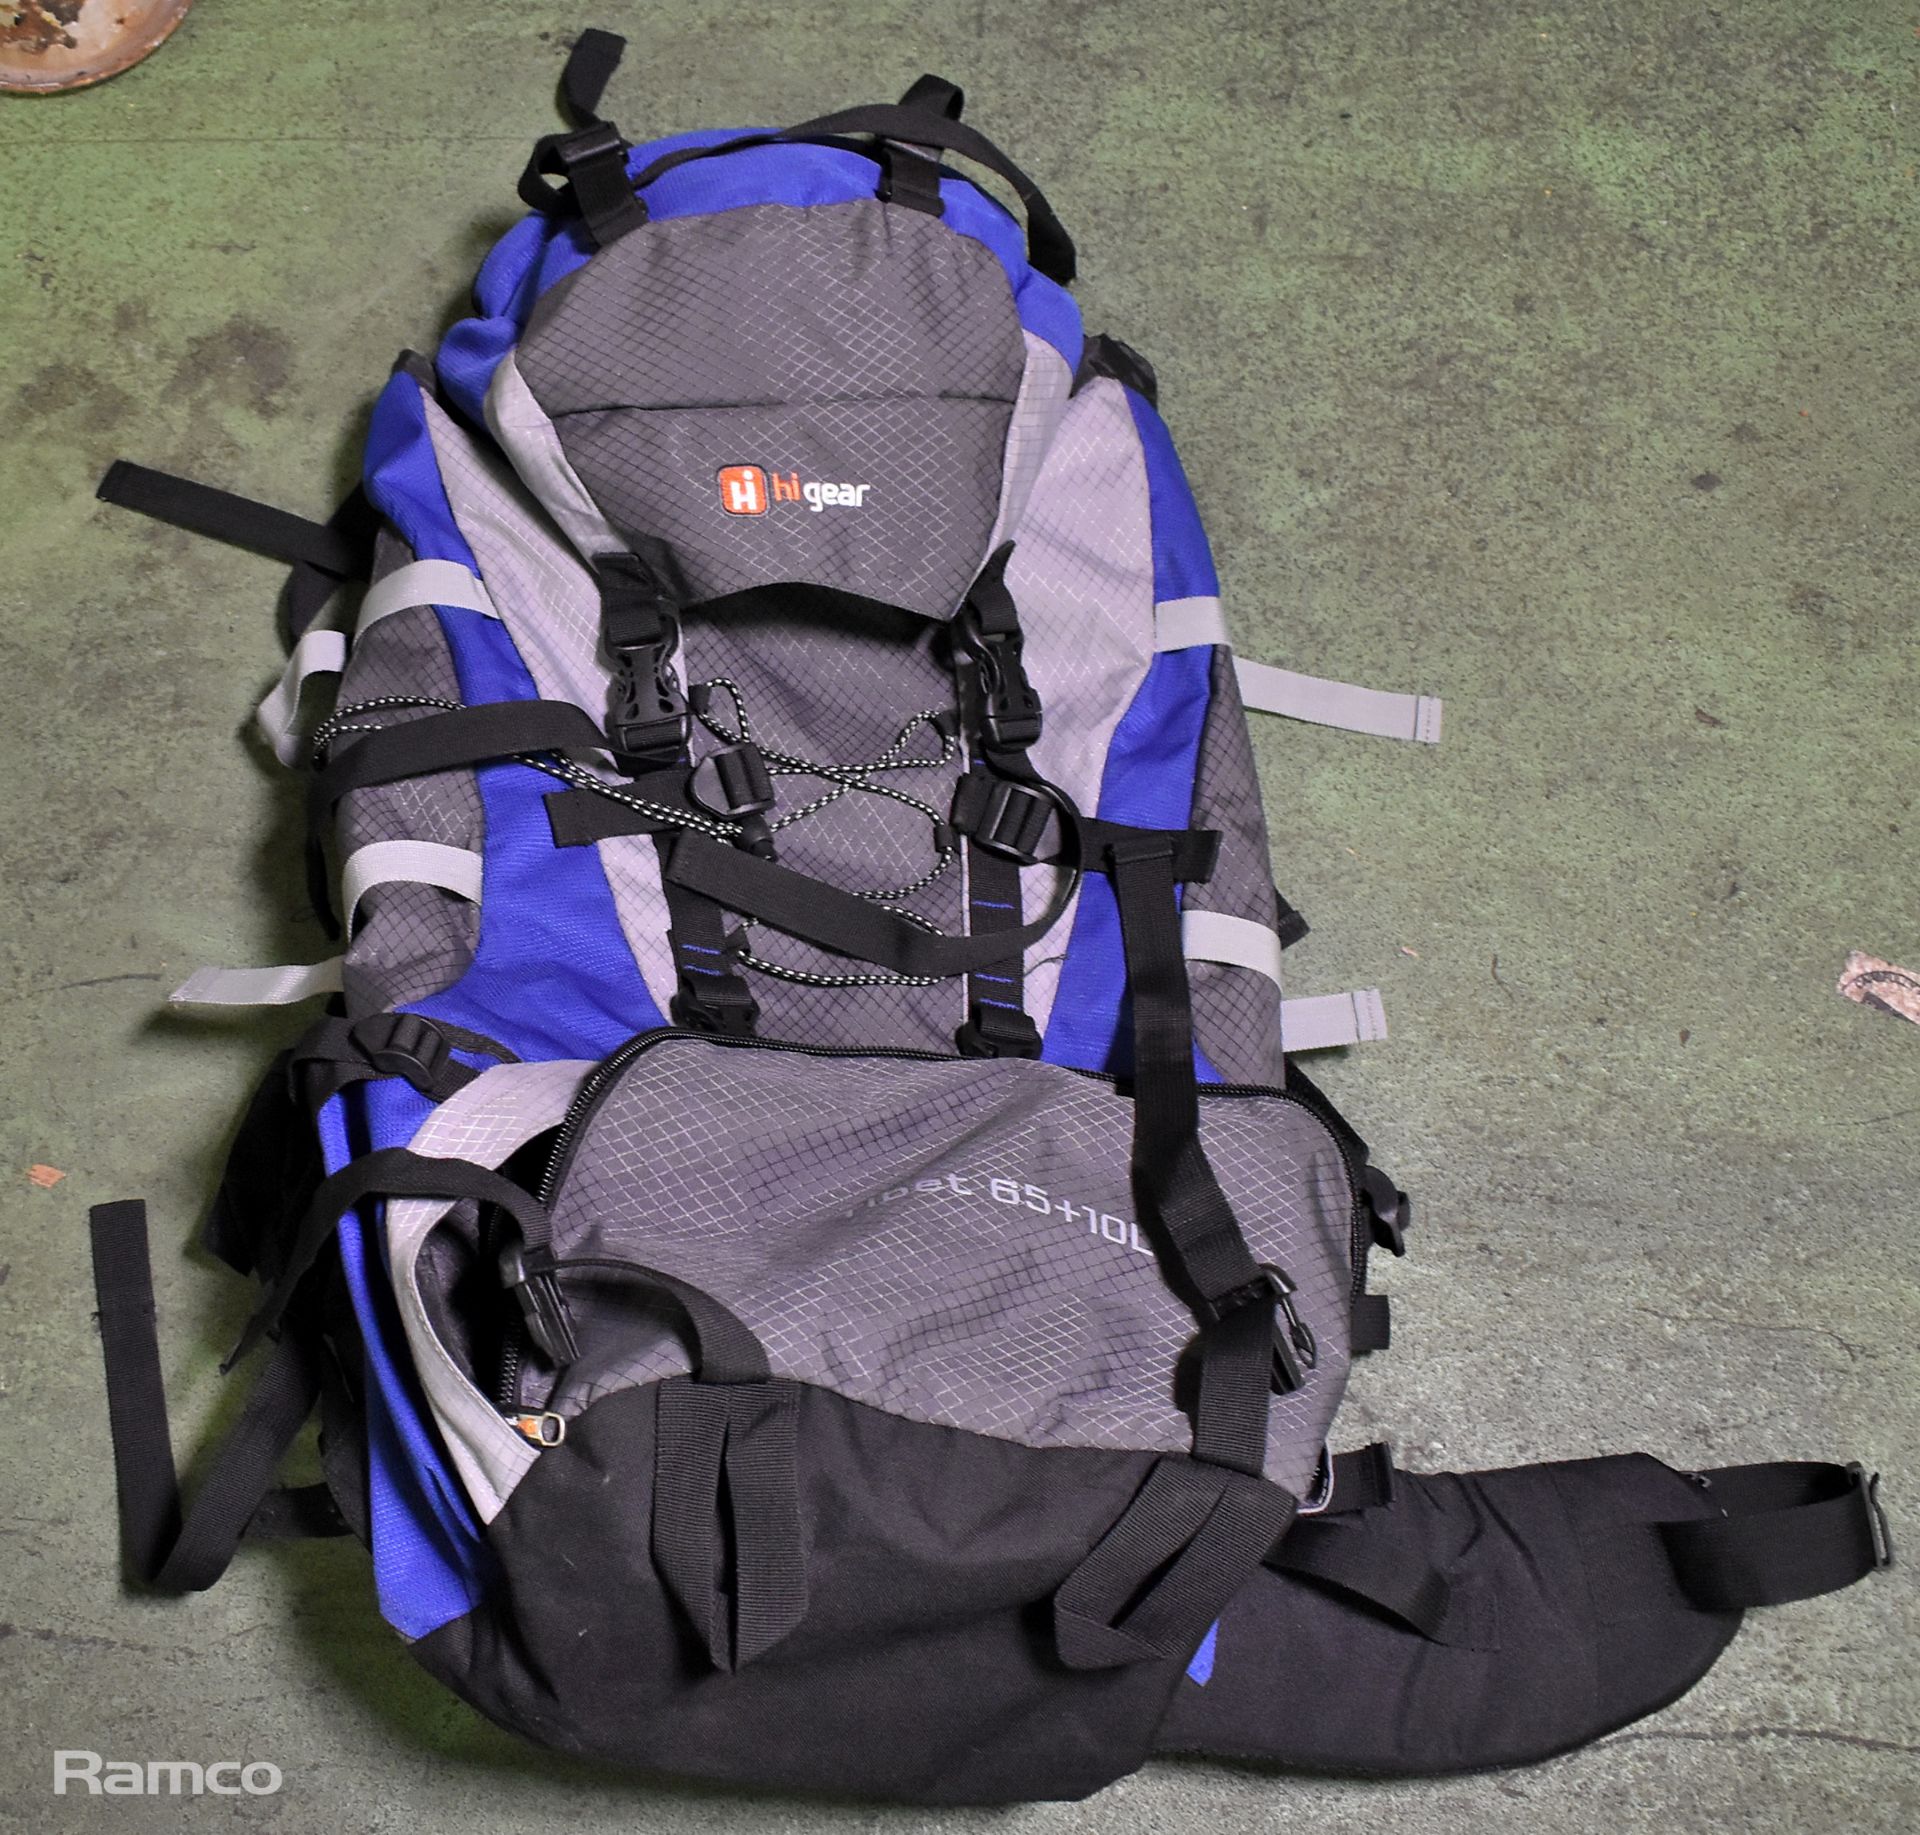 Outdoor equipment - 8x harness, 2x aluminium framed folding canvas beds, 1x rucksack - Image 7 of 10